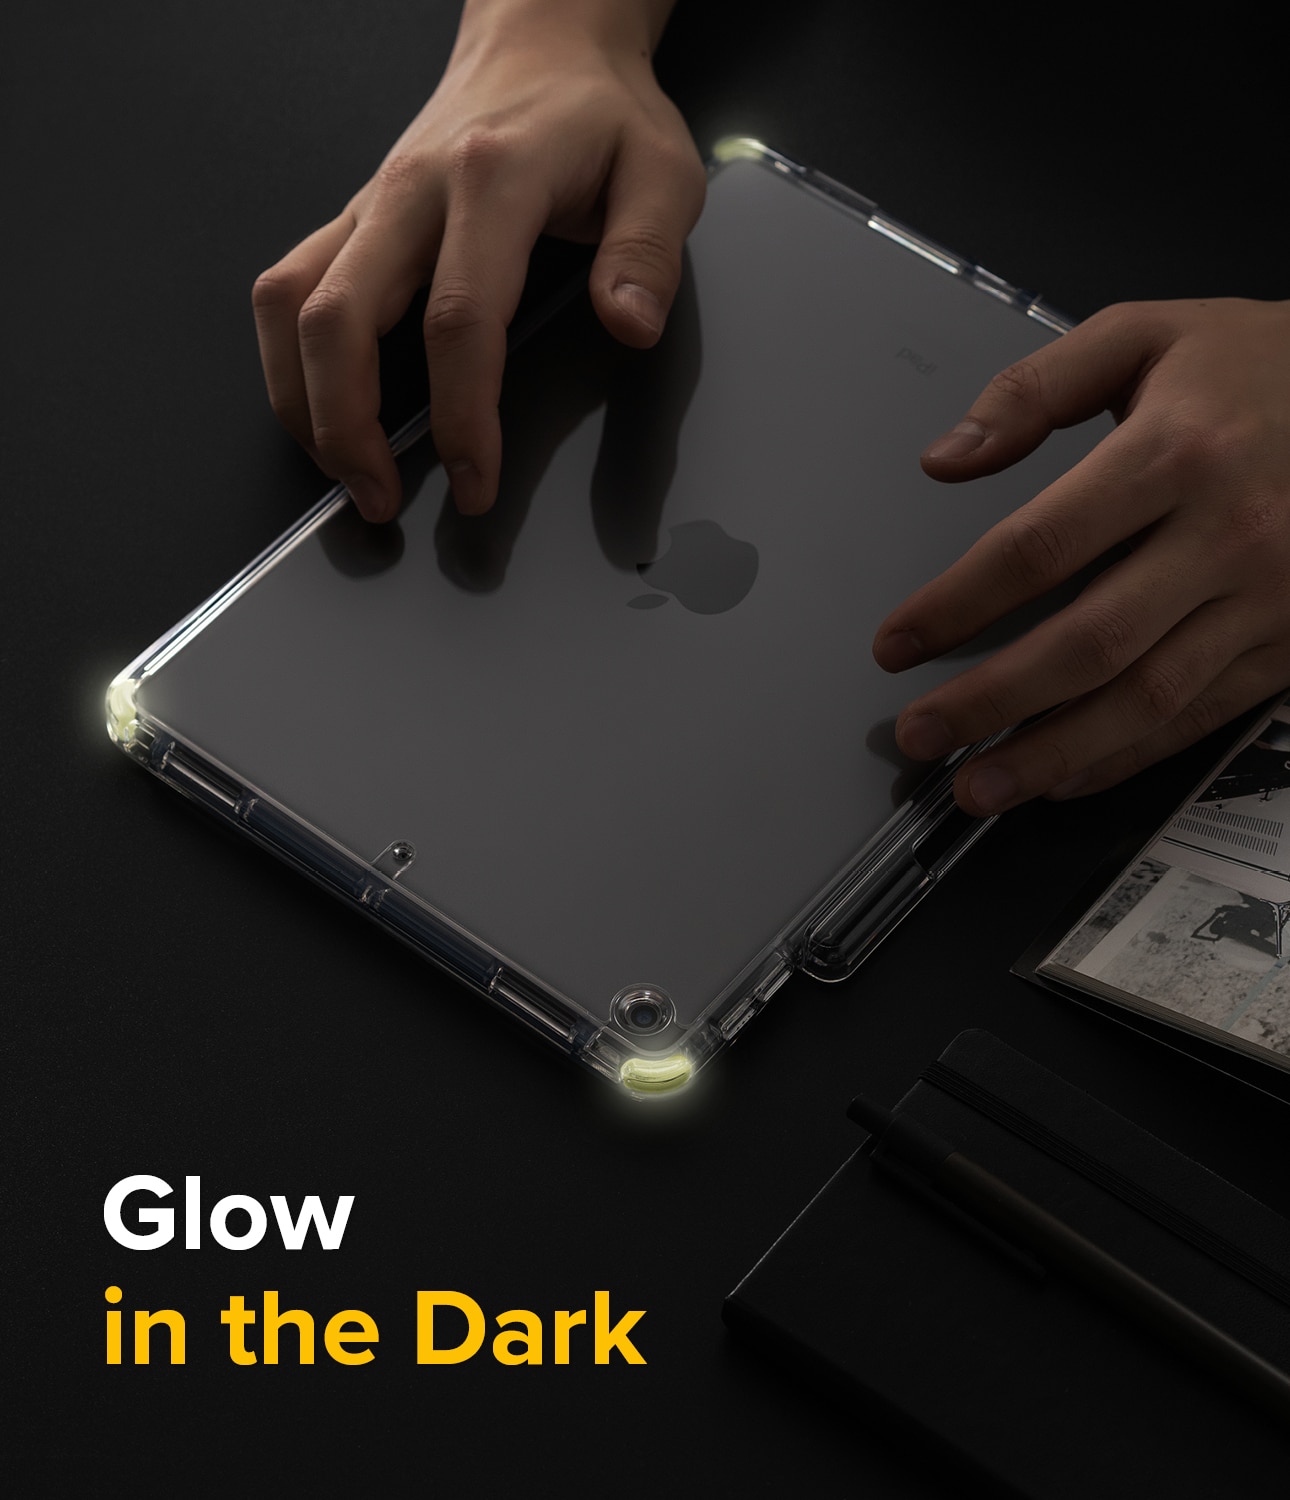 Coque Fusion Plus iPad 10.2 8th Gen (2020), White/Lime Glow